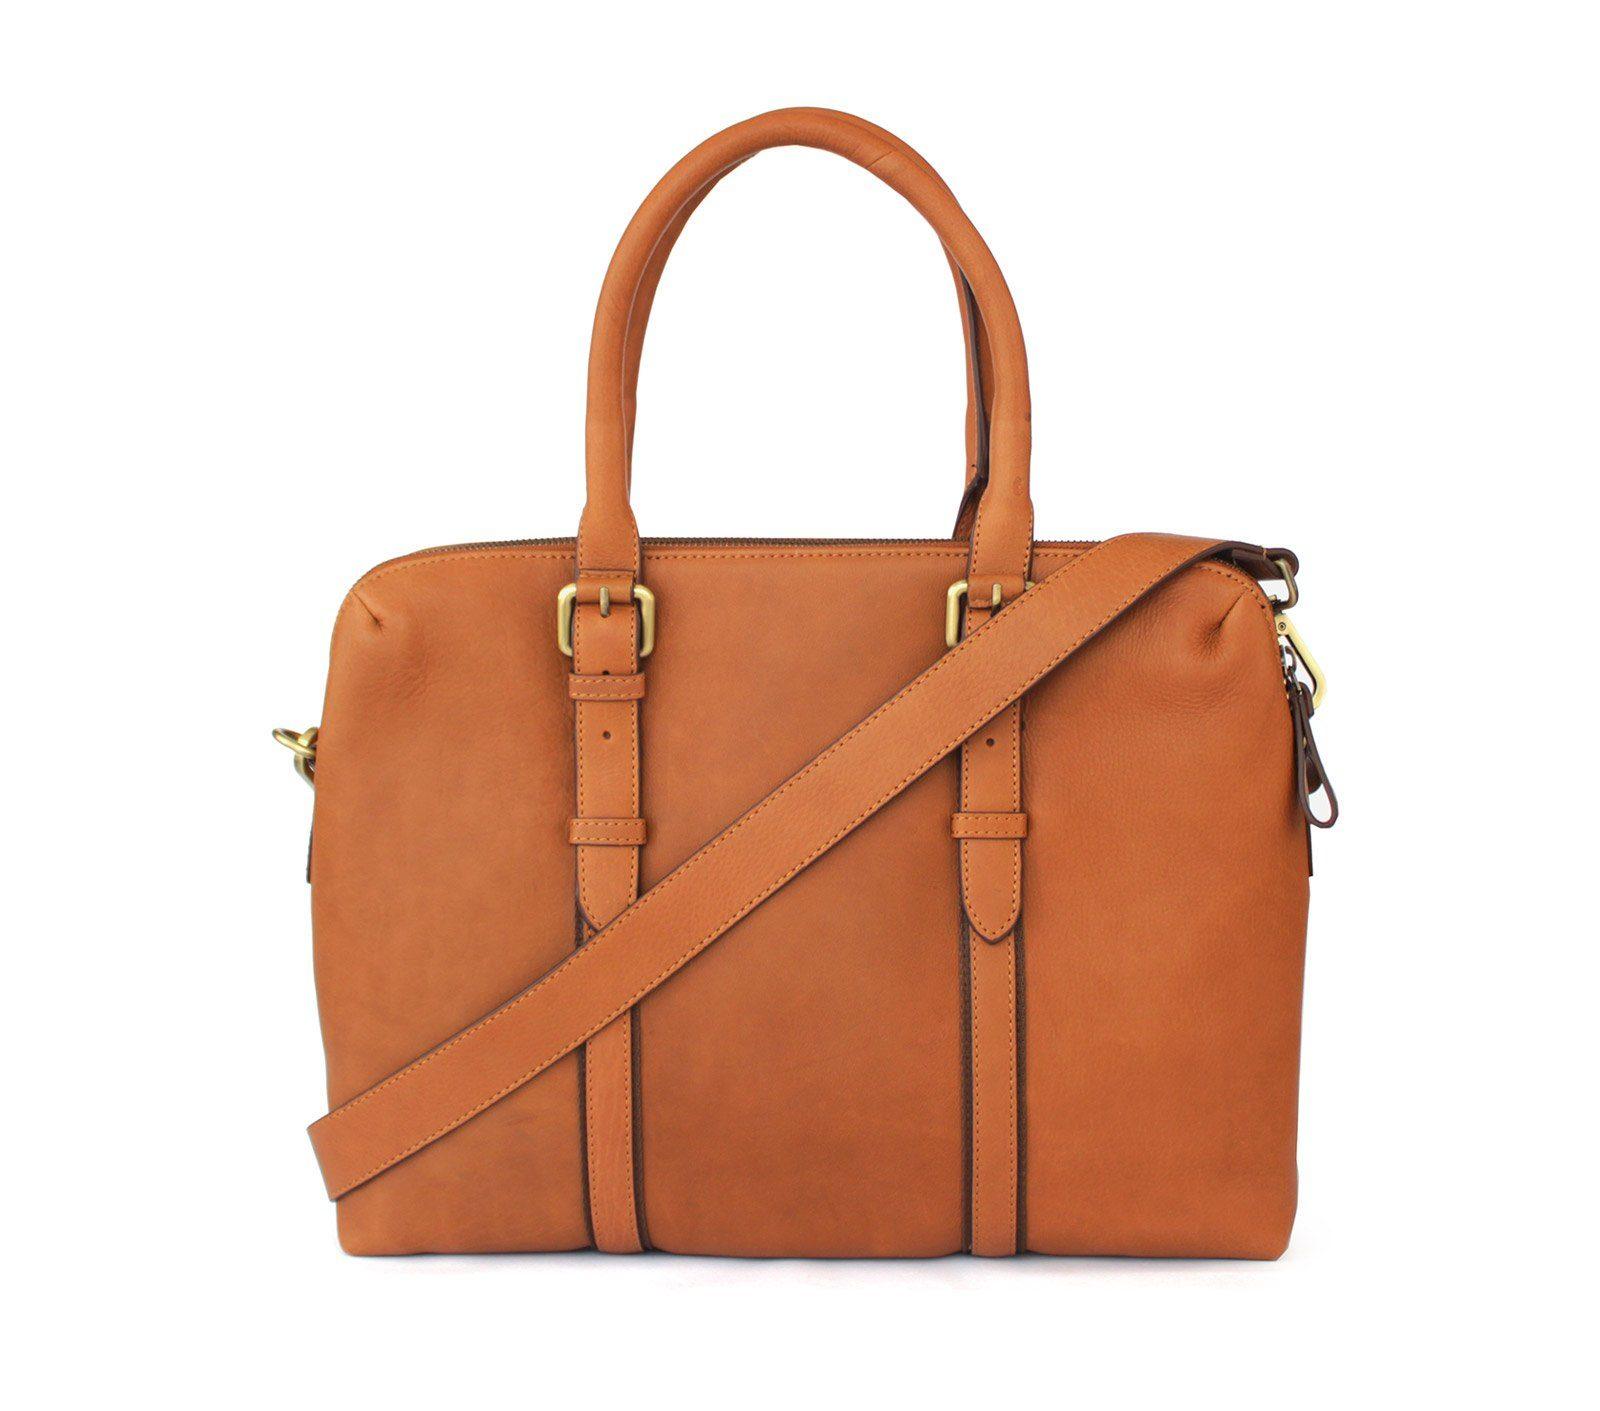 Buy Black & Tan Leather Handbag Online - RK India Store View